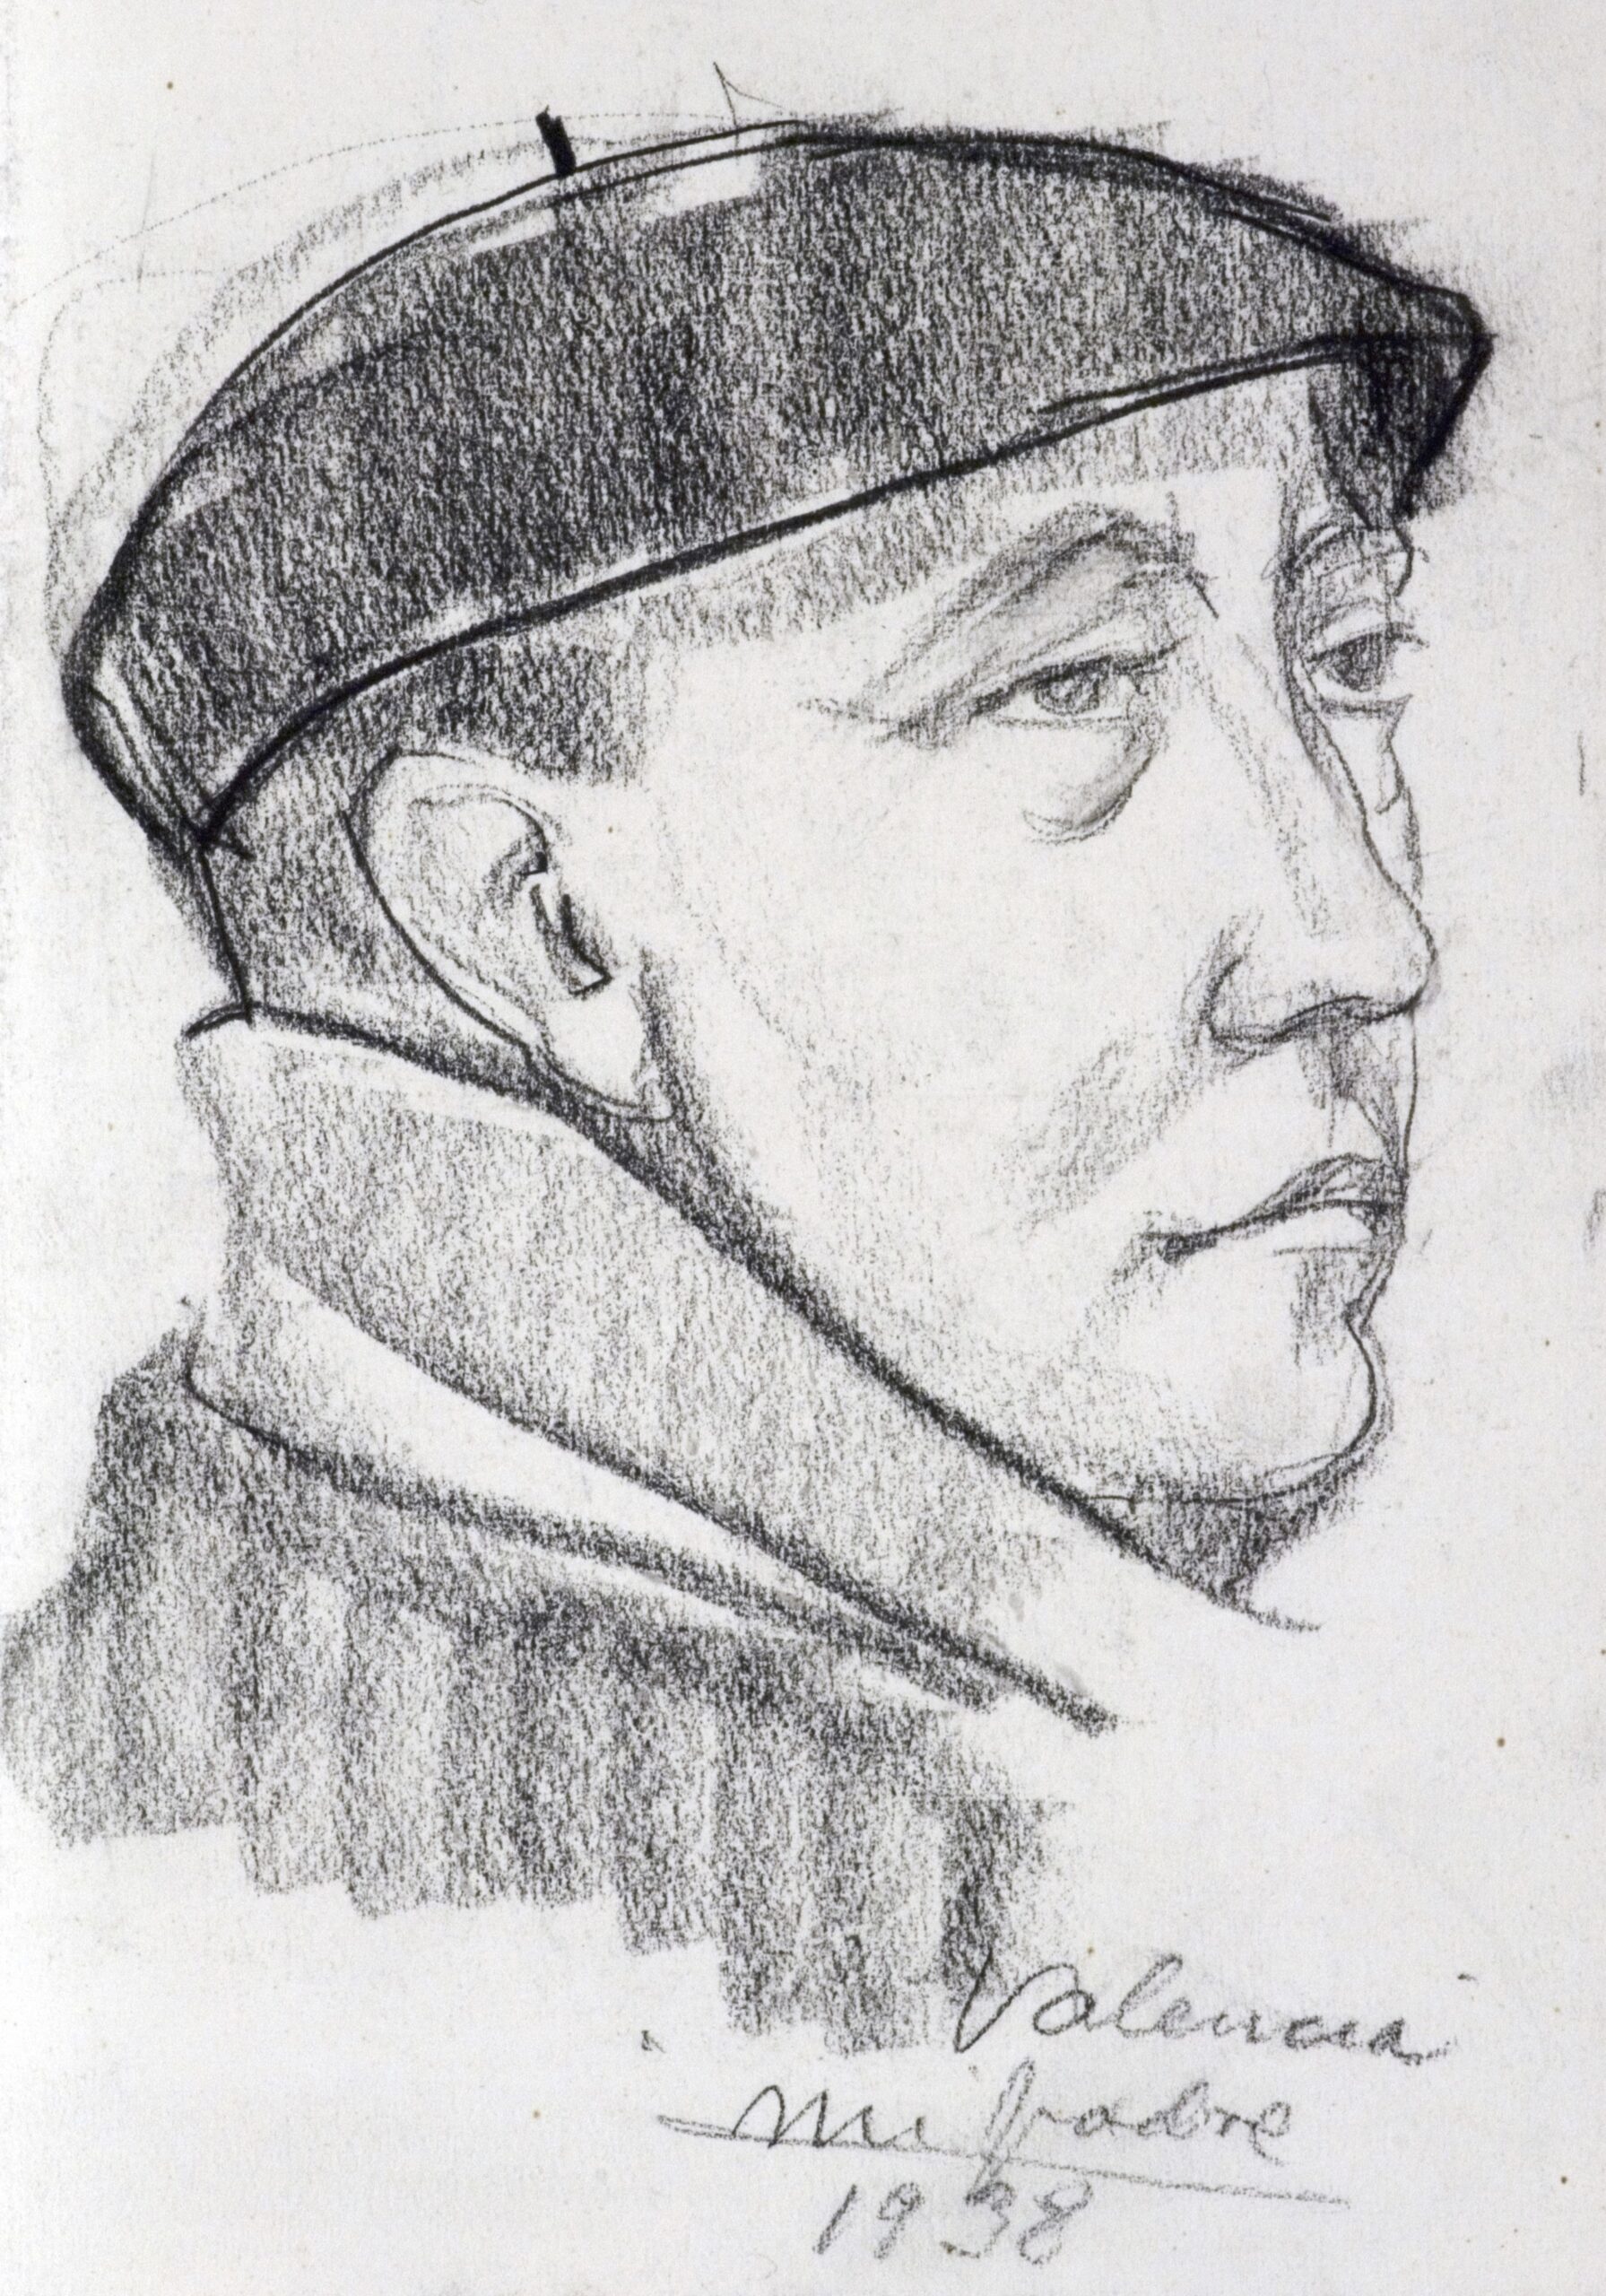 Dibujo de José Manaut titulado Mi padre, retrato de José Manaut Nogués, Valencia, 1938. Carboncillo sobre papel.